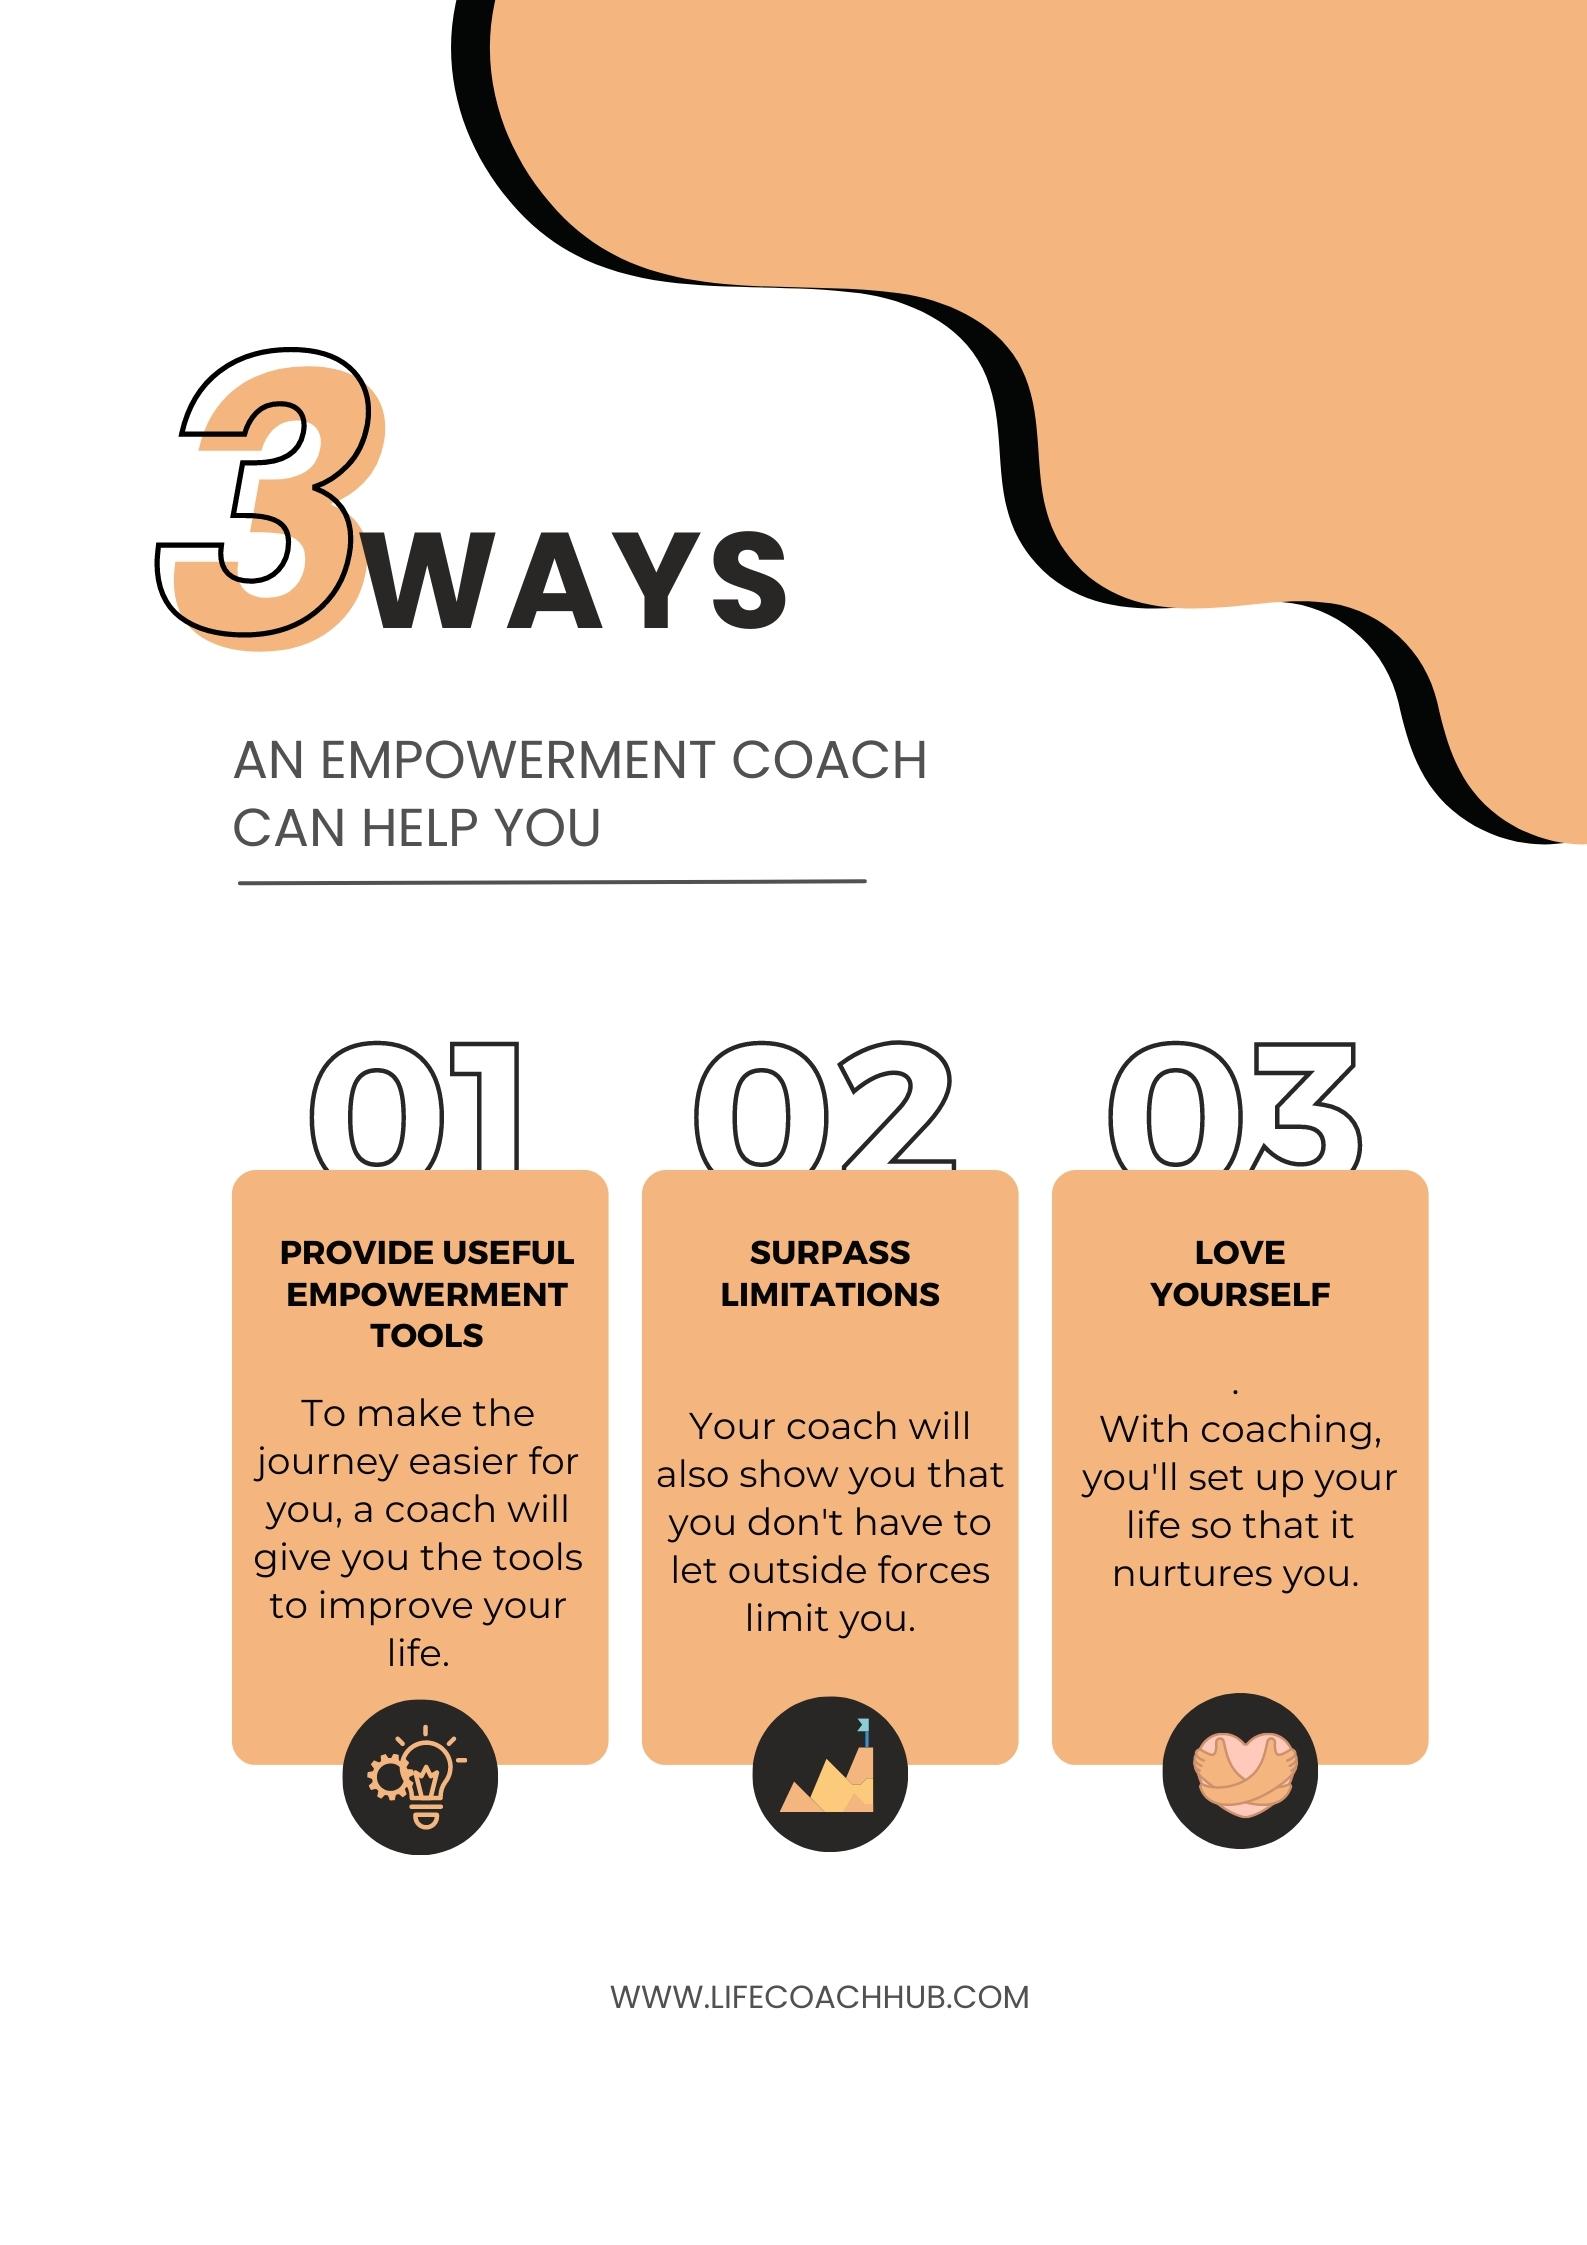 3 Ways an empowerment coach can help you